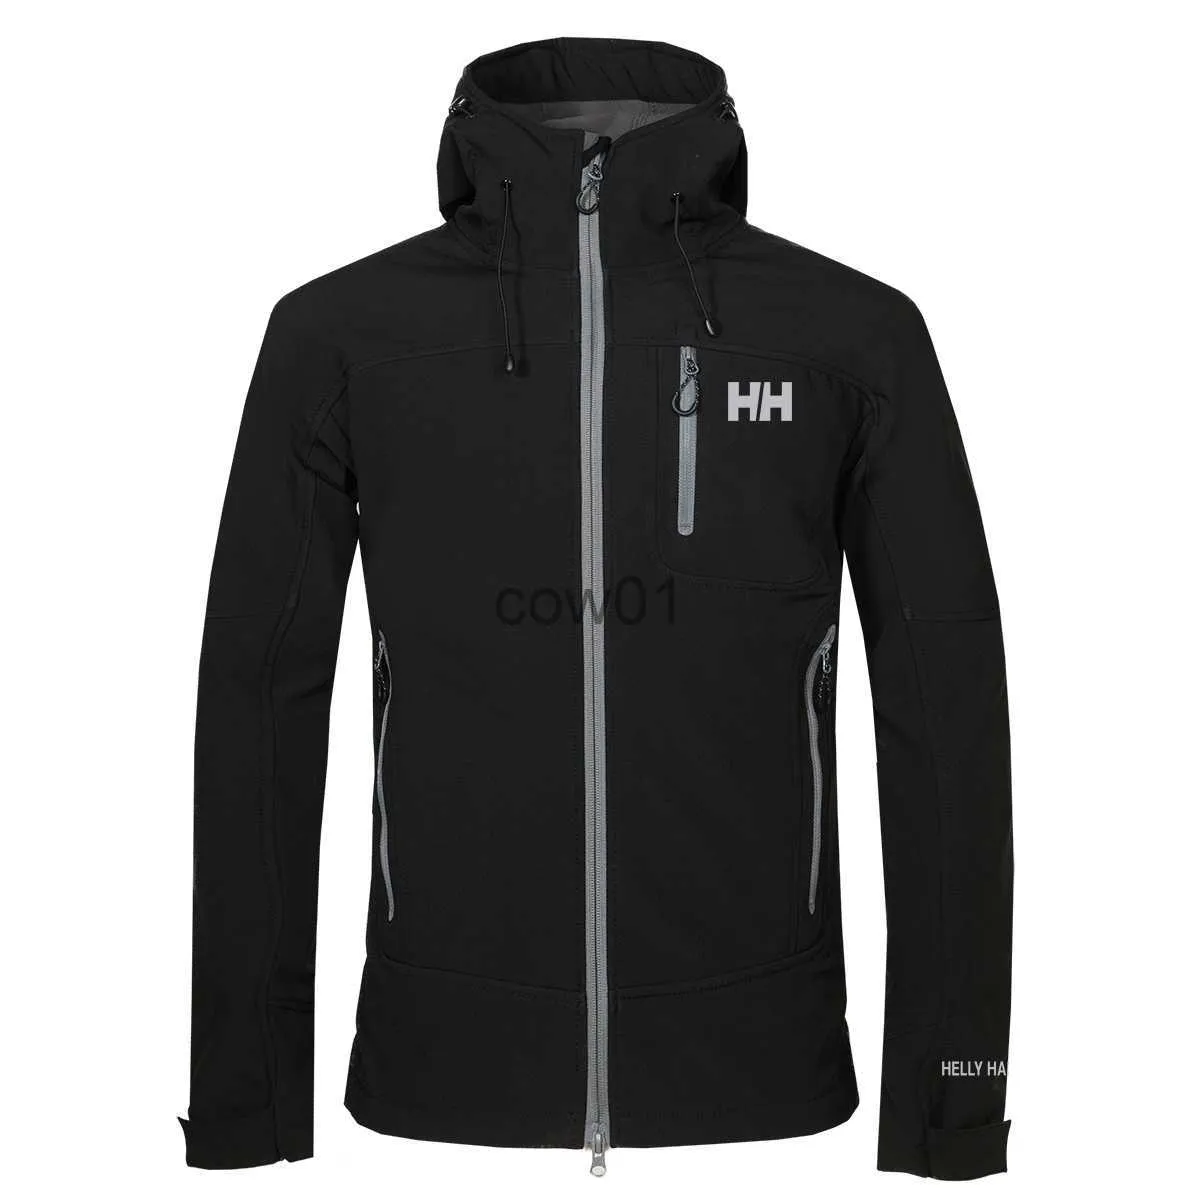 Heren Jackets 2019 Nieuw The Mens Jackets Hoodies Fashion Casual Warm Winddichte Ski Face Coats buitenshuis Denali Fleece Jackets S-XXL 17161 J230822